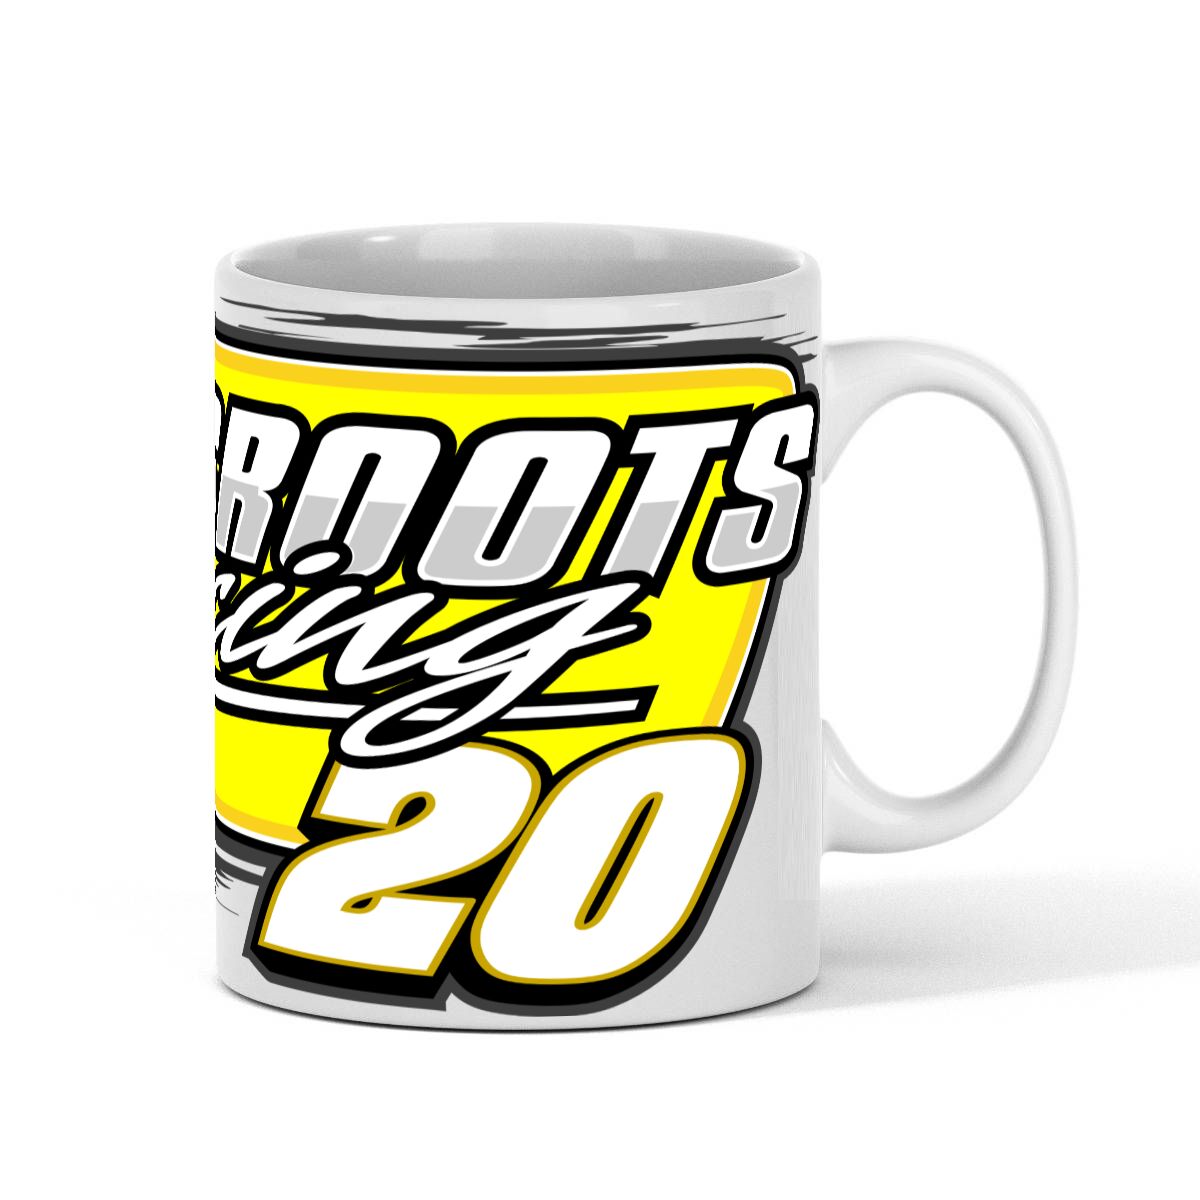 Cole McFadden / Grassroots Racing Coffee Mug